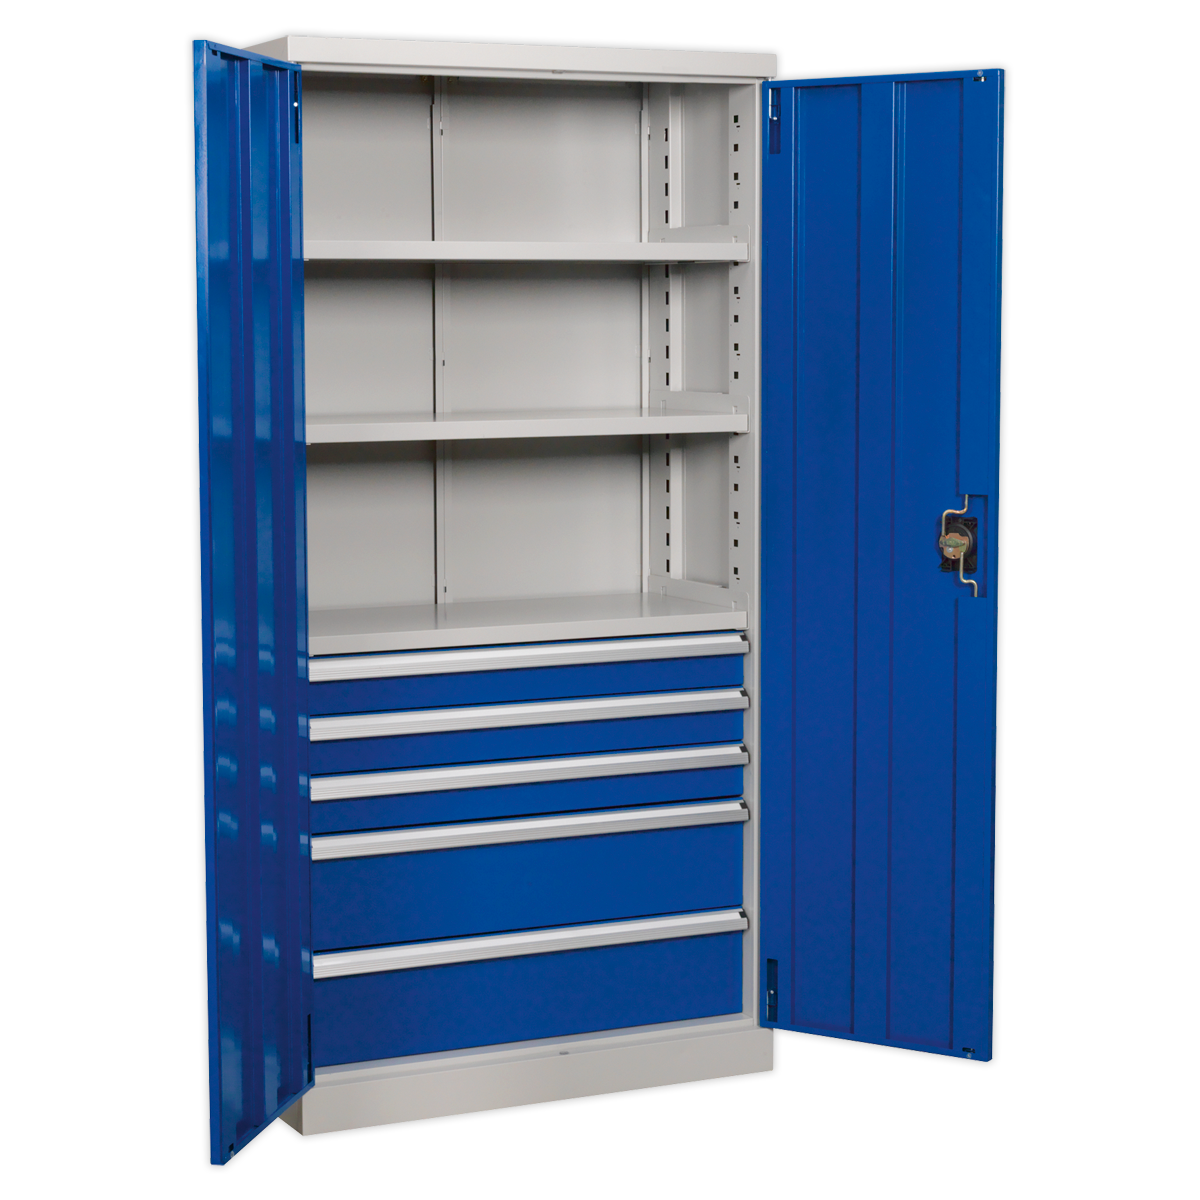 Sealey APICCOMBO5 Industrial Cabinet 5 Drawer 3 Shelf 1800mm